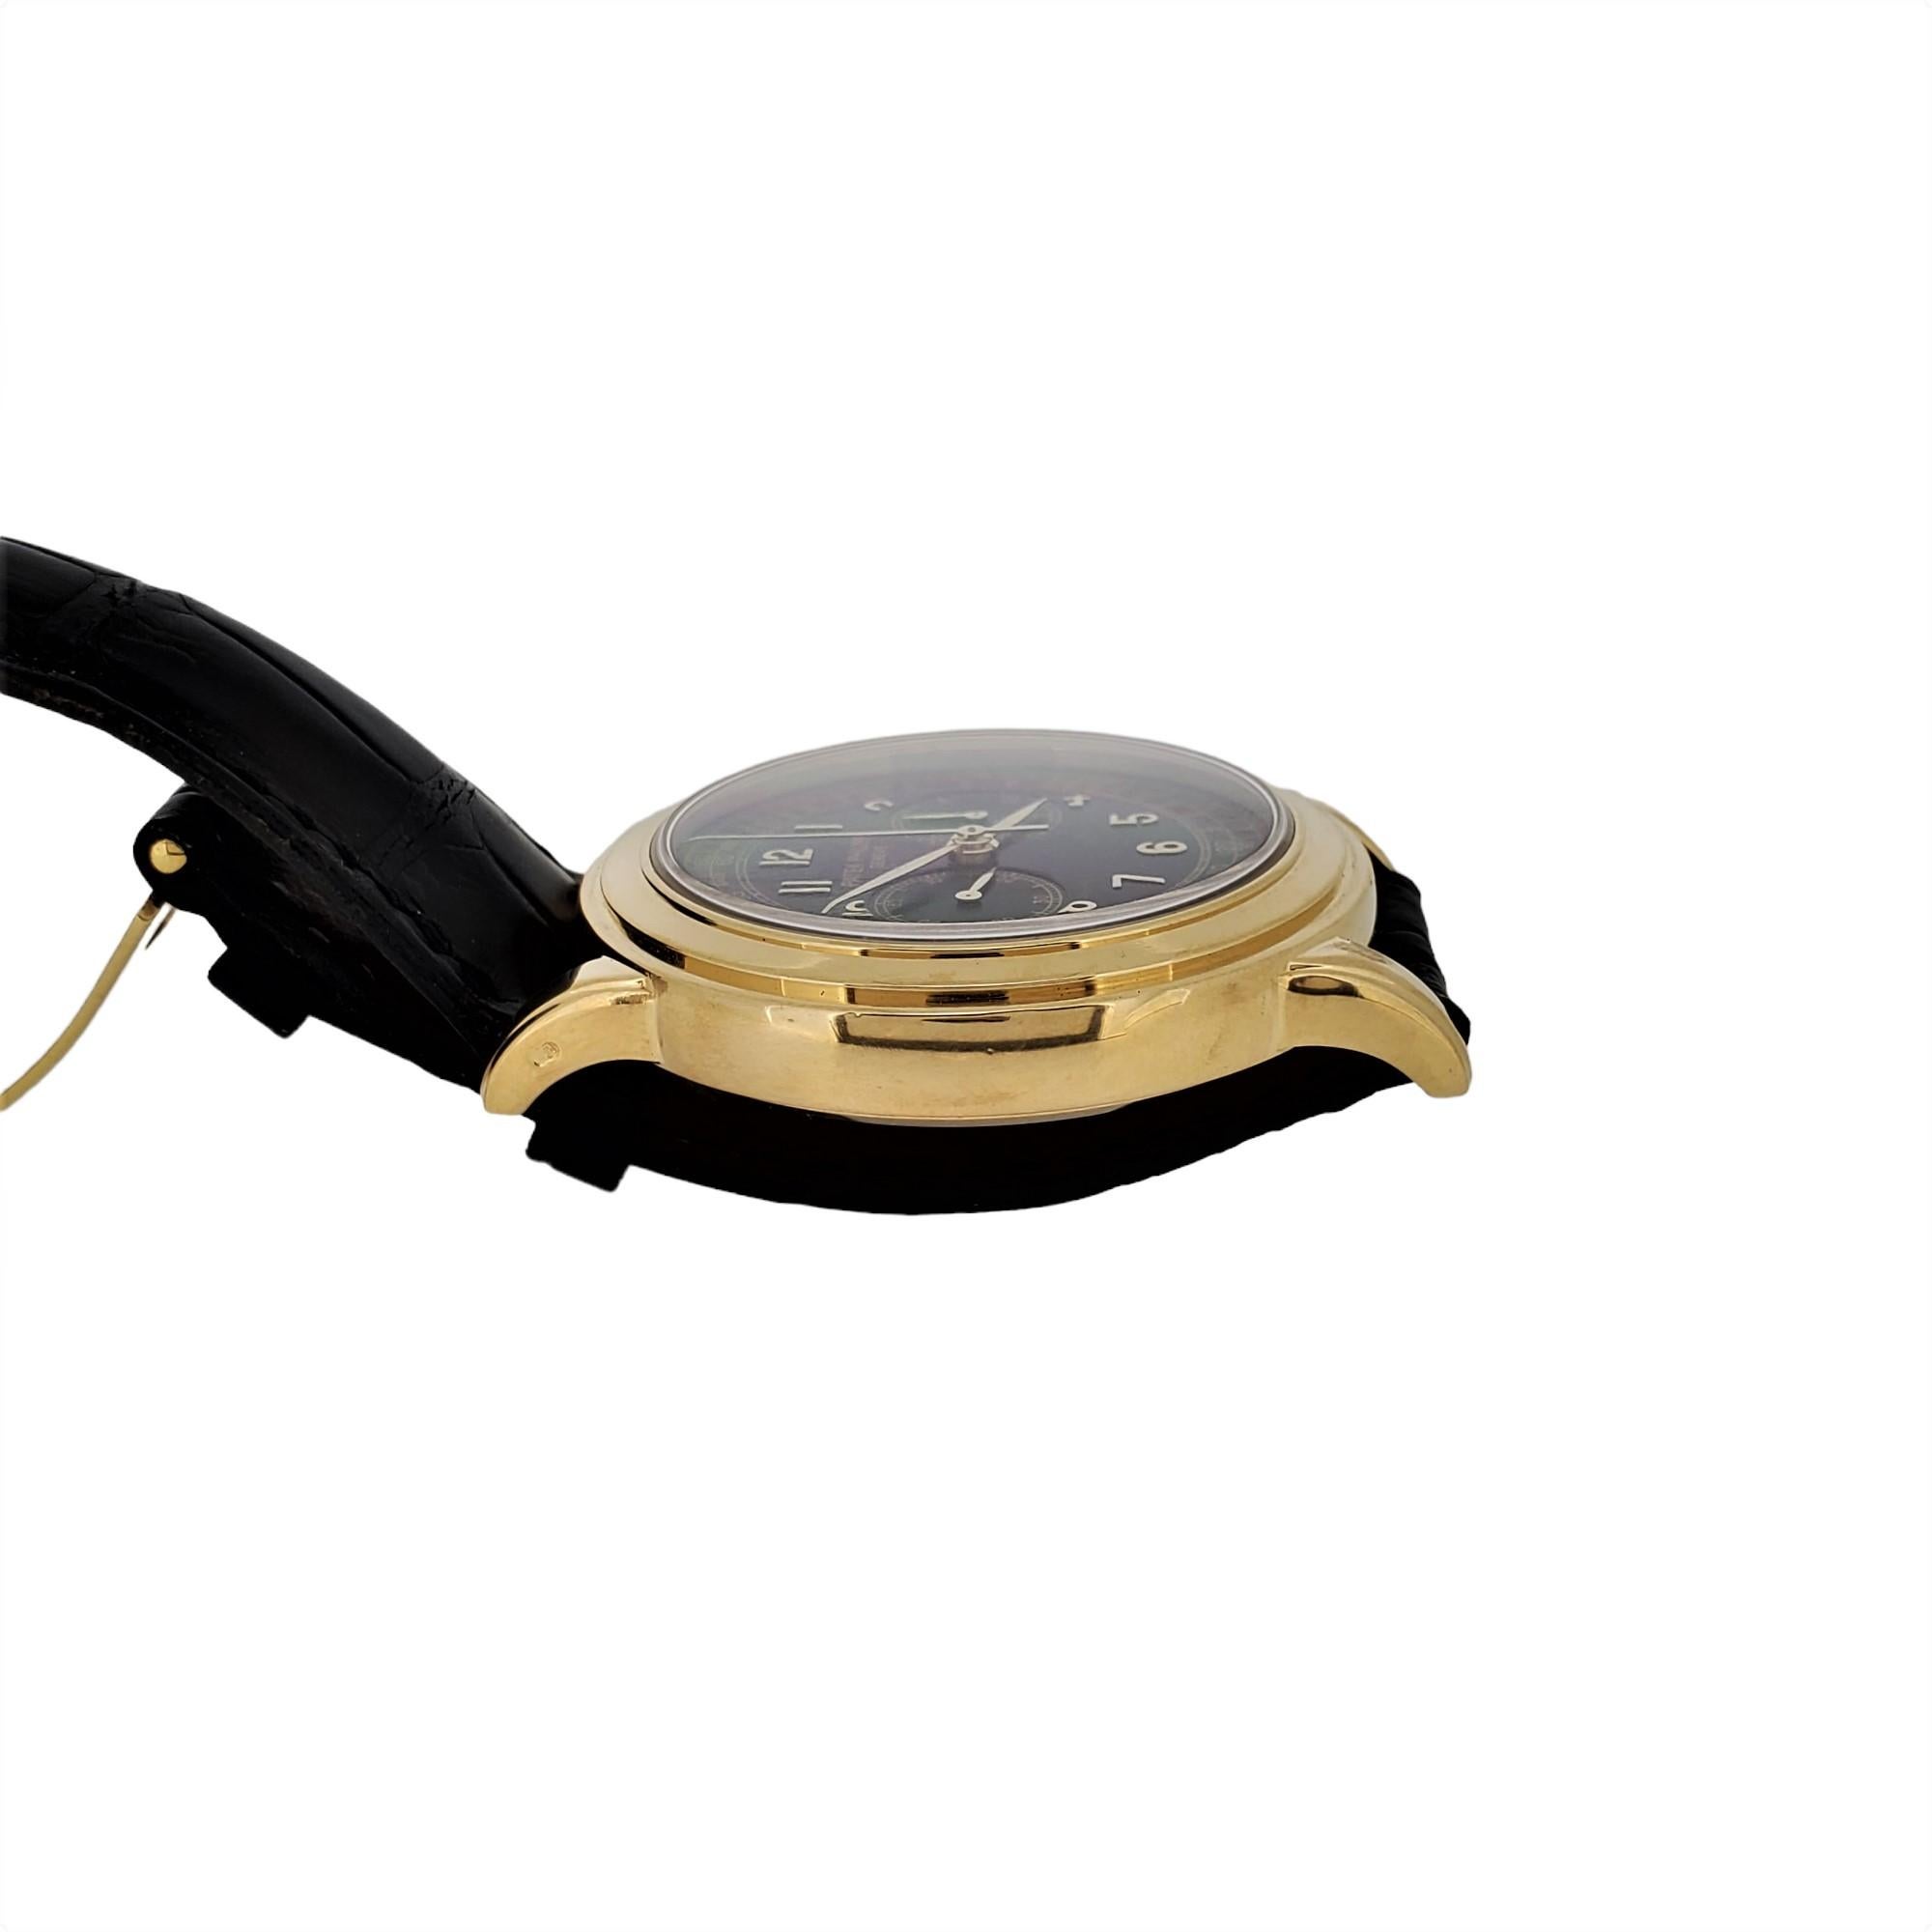 Men's Patek Philippe 5070J Chronograph Watch Yellow gold 42 mm Case Circa 2000 For Sale